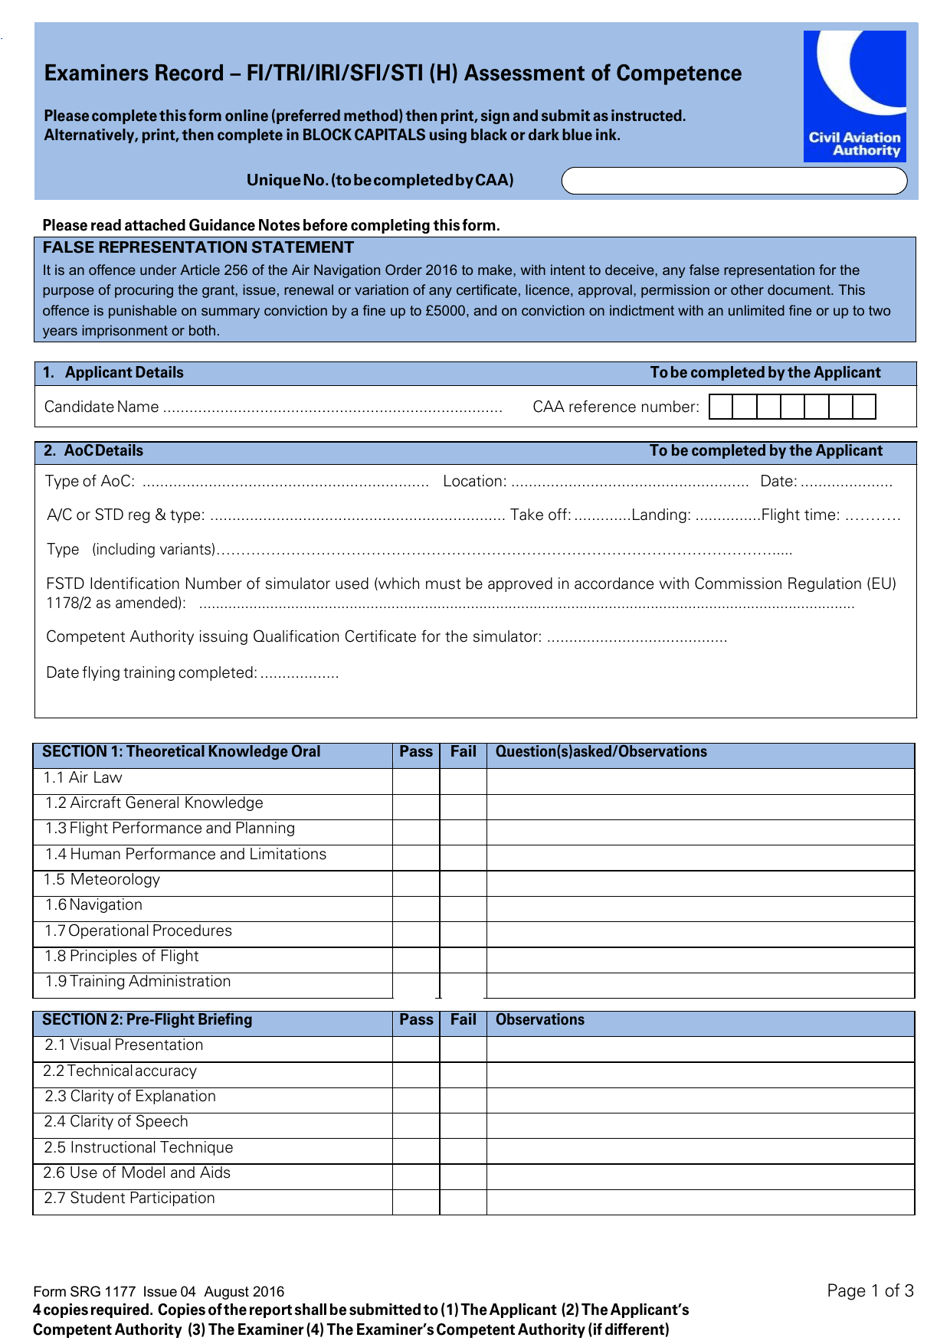 Form SRG1177 Examiners Record - Fi / Tri / Iri / Sfi / Sti (H) Assessment of Competence - United Kingdom, Page 1